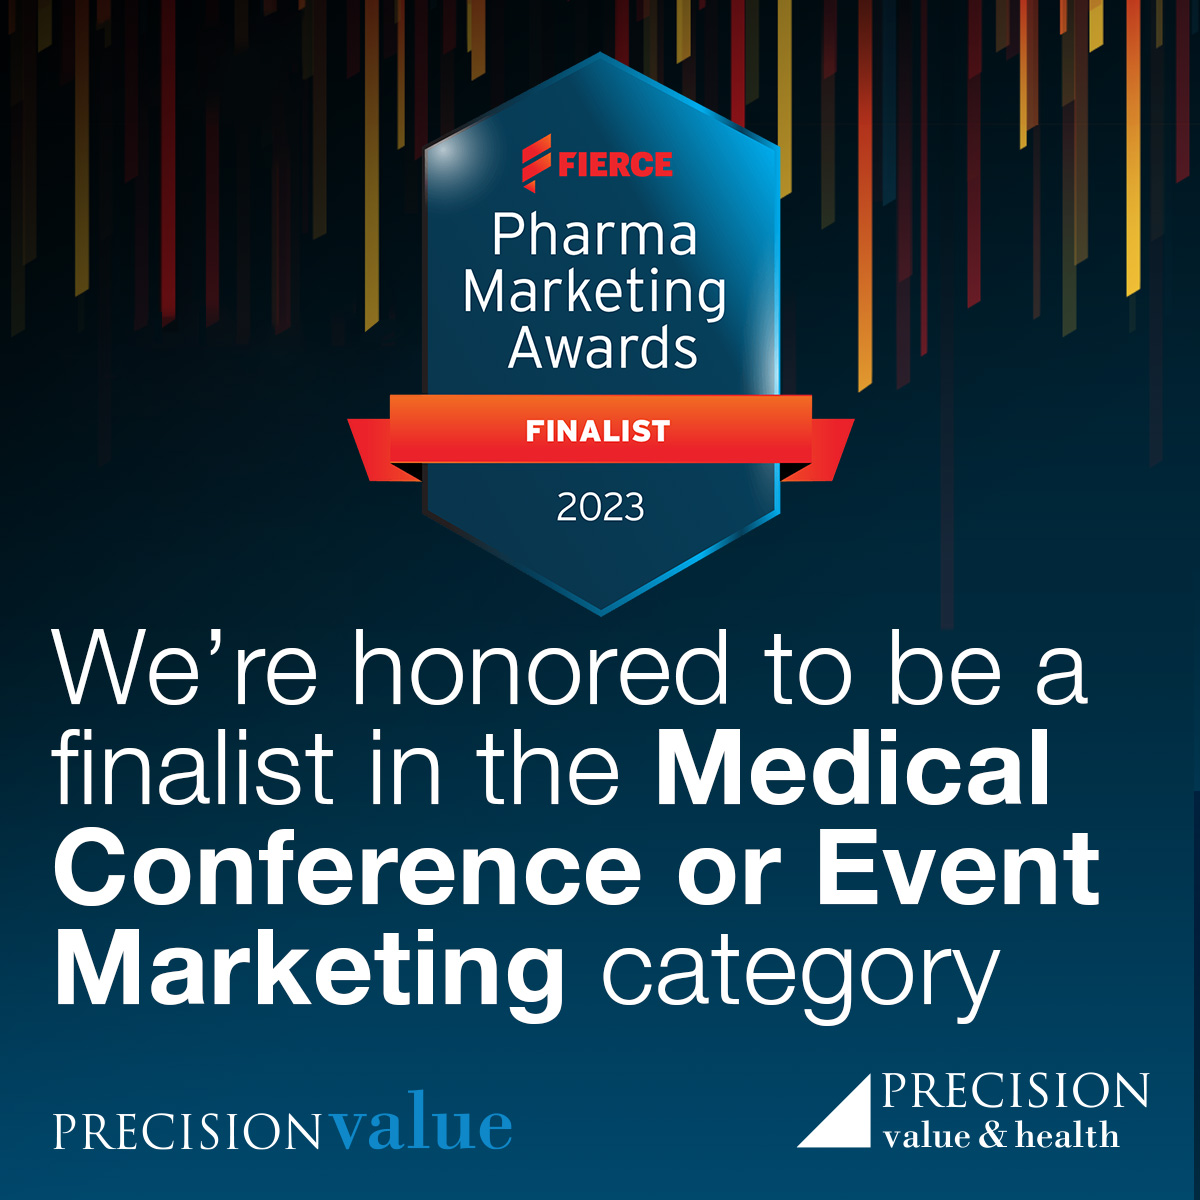 Fierce Pharma Marketing Awards